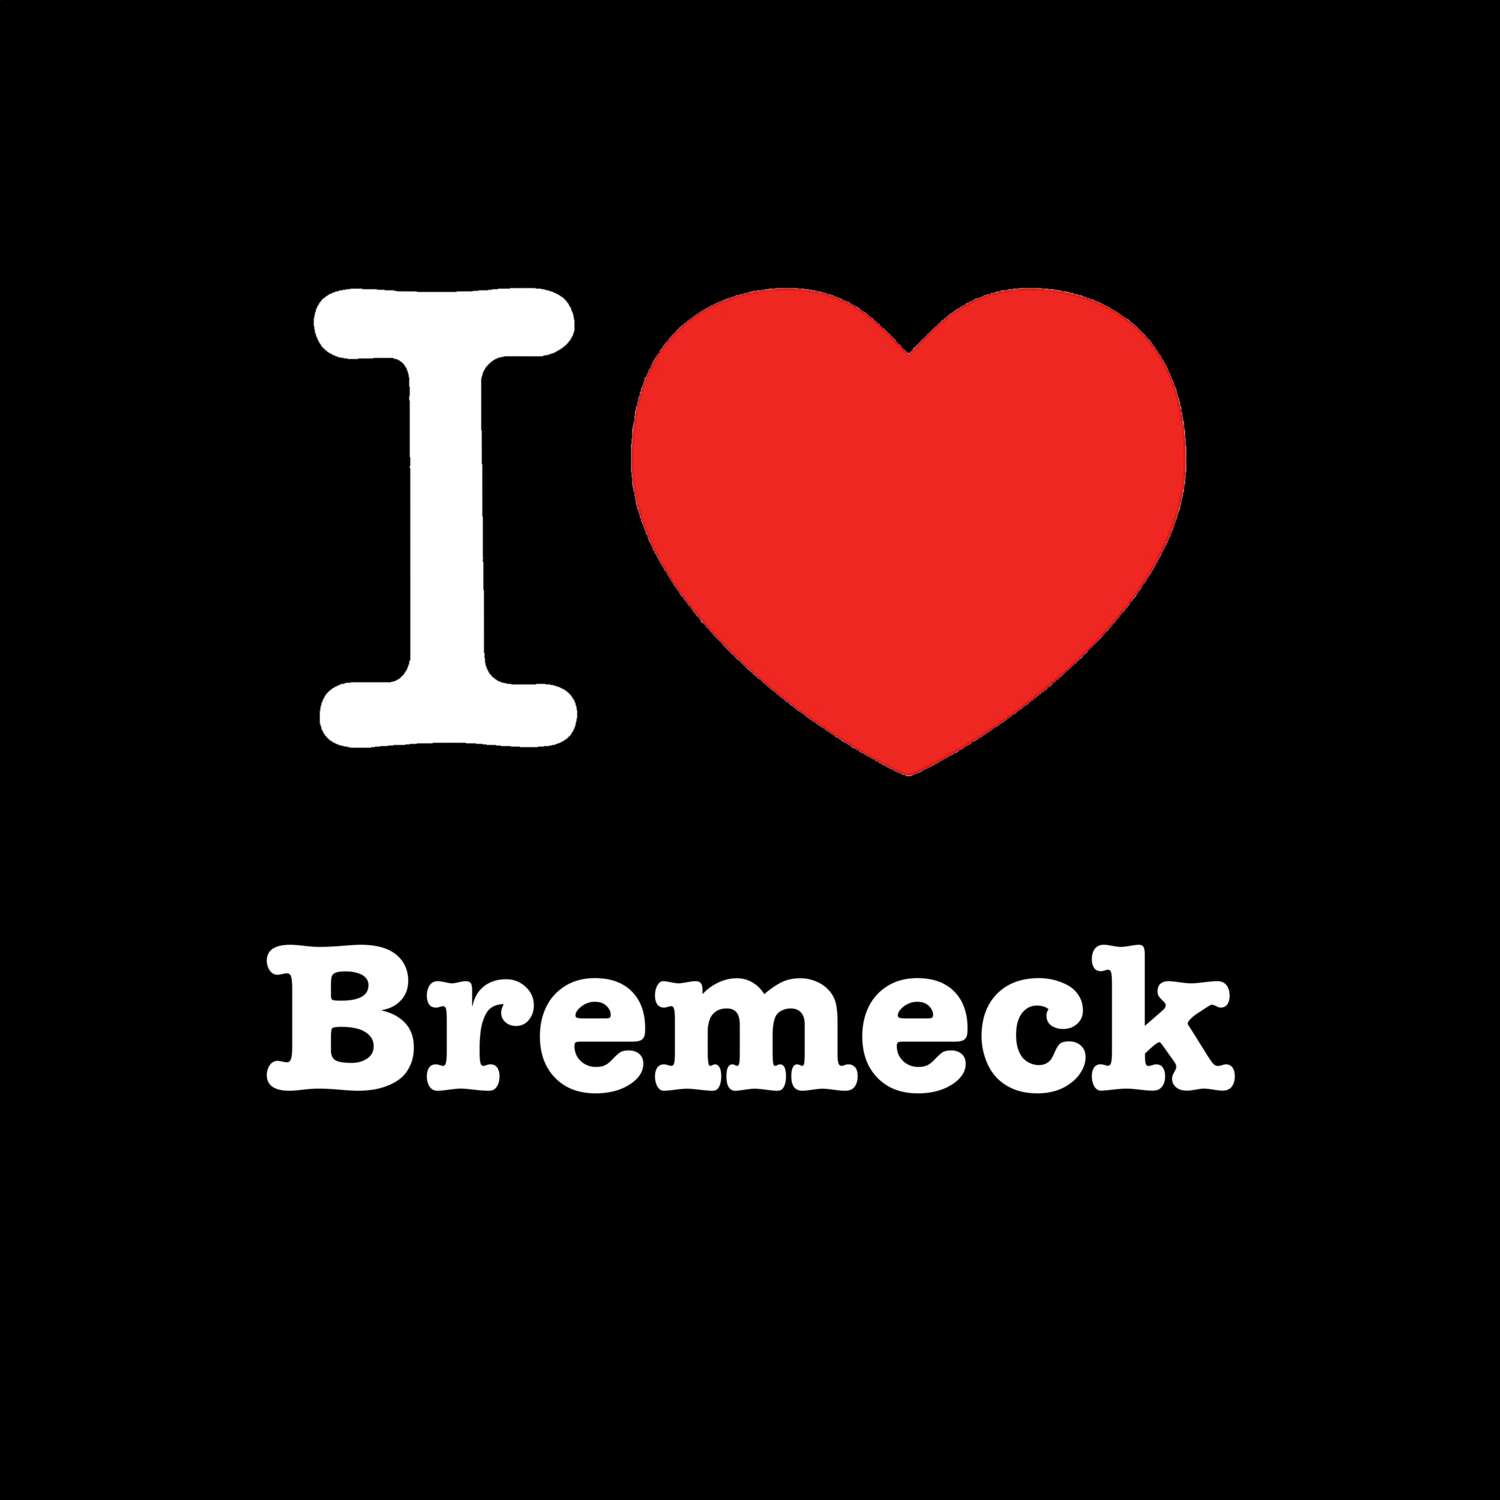 Bremeck T-Shirt »I love«